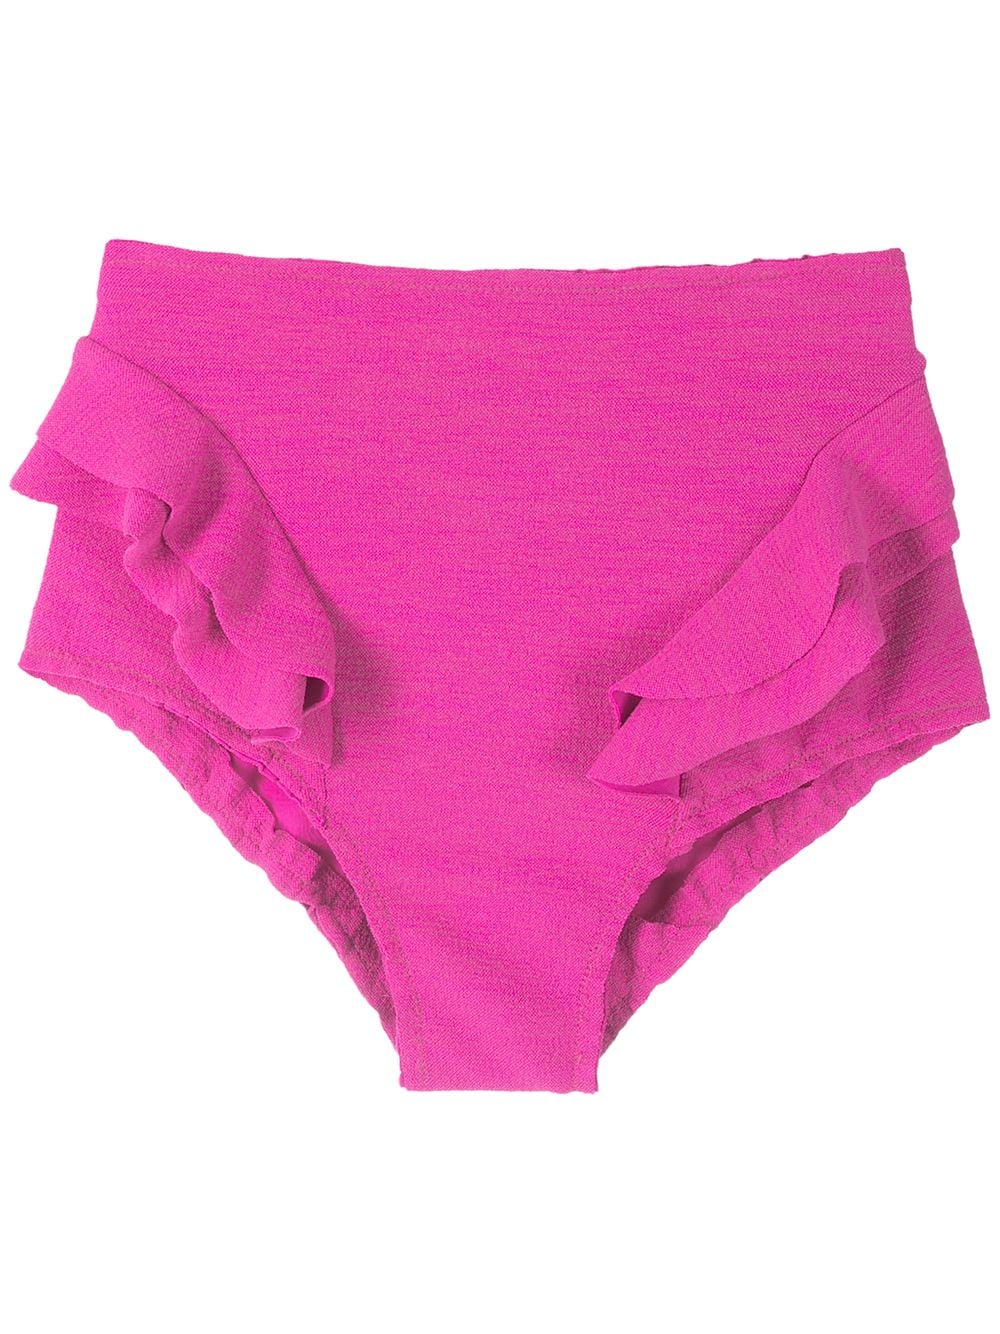 Clube Bossa Hopi high rise bikini bottoms - Pink von Clube Bossa